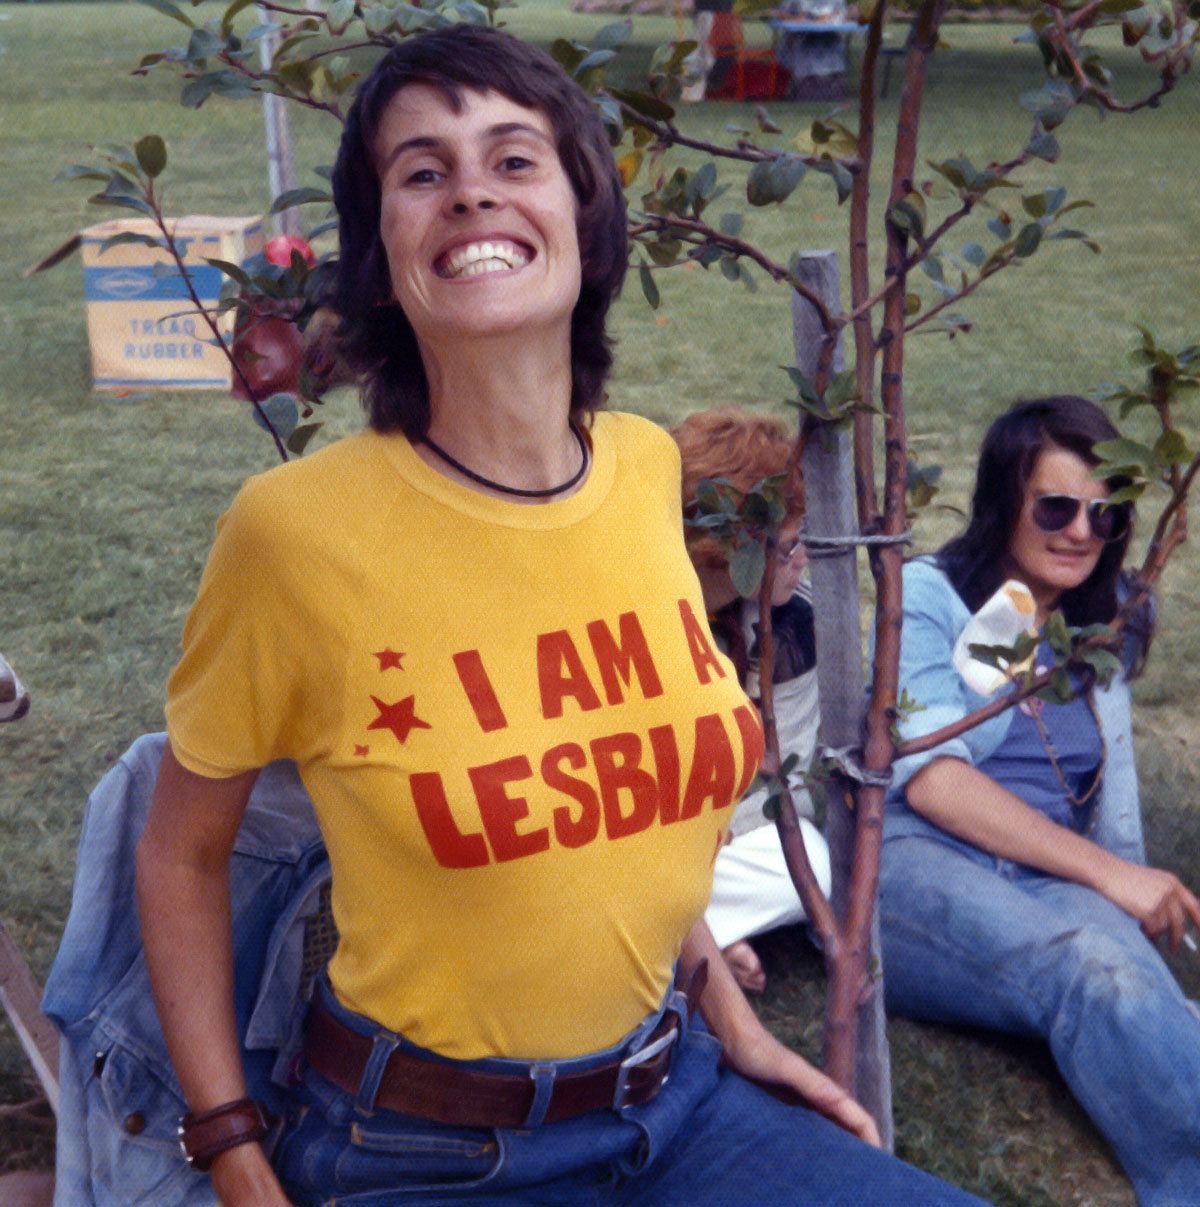 Lesbian t-shirt